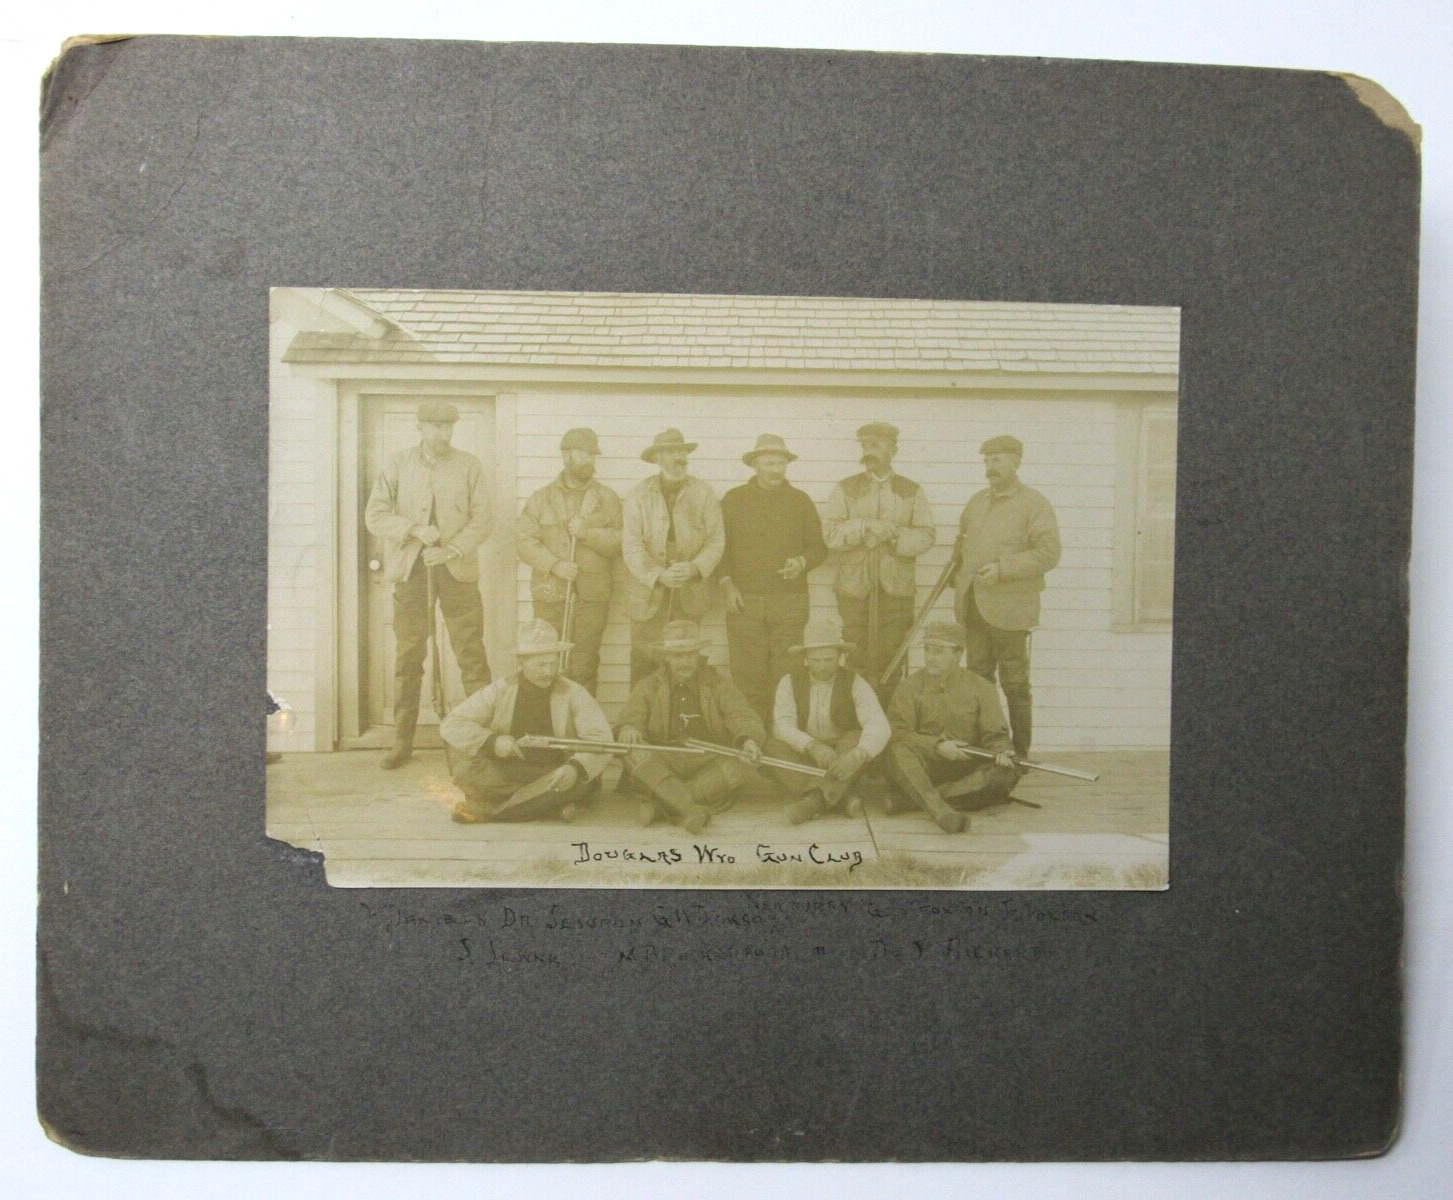 RARE 1890 Large Photograph of Douglas Wyoming Hunting Club Shotguns Pioneers Idd